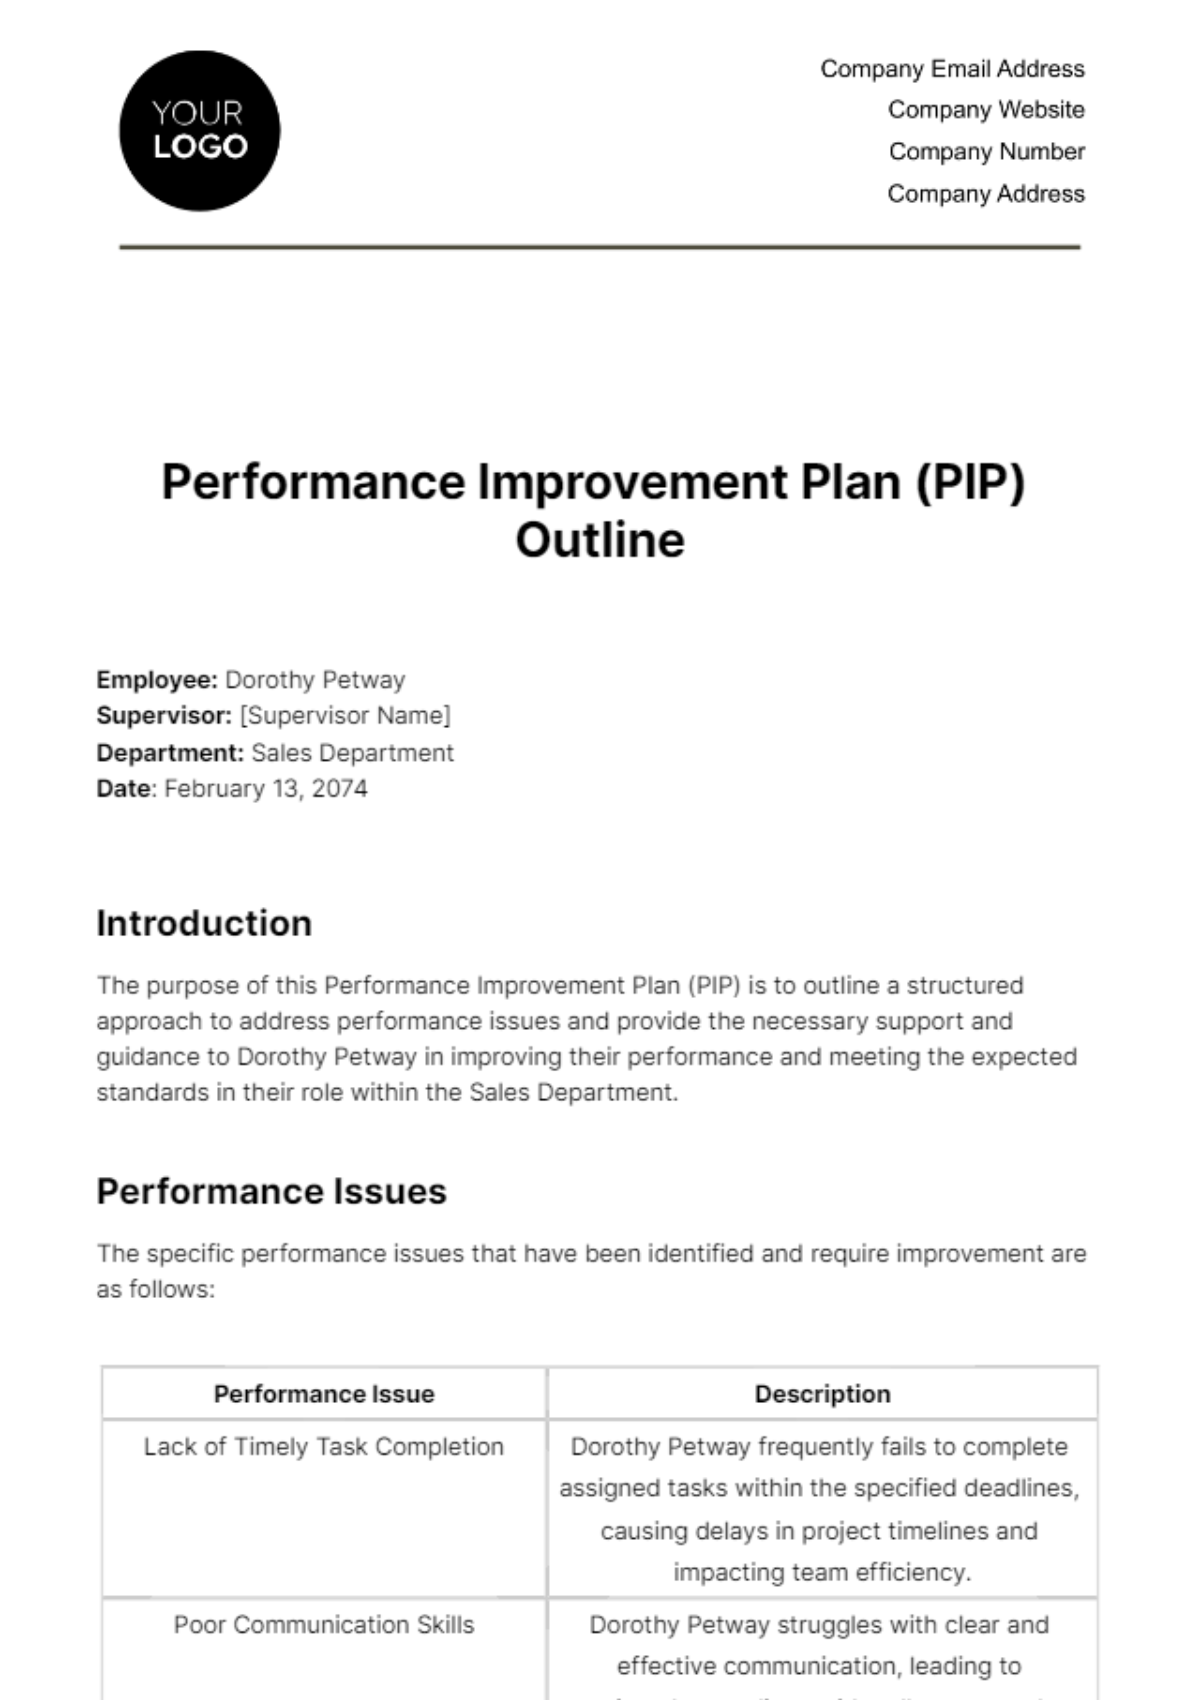 Free Performance Improvement Plan (PIP) Outline HR Template